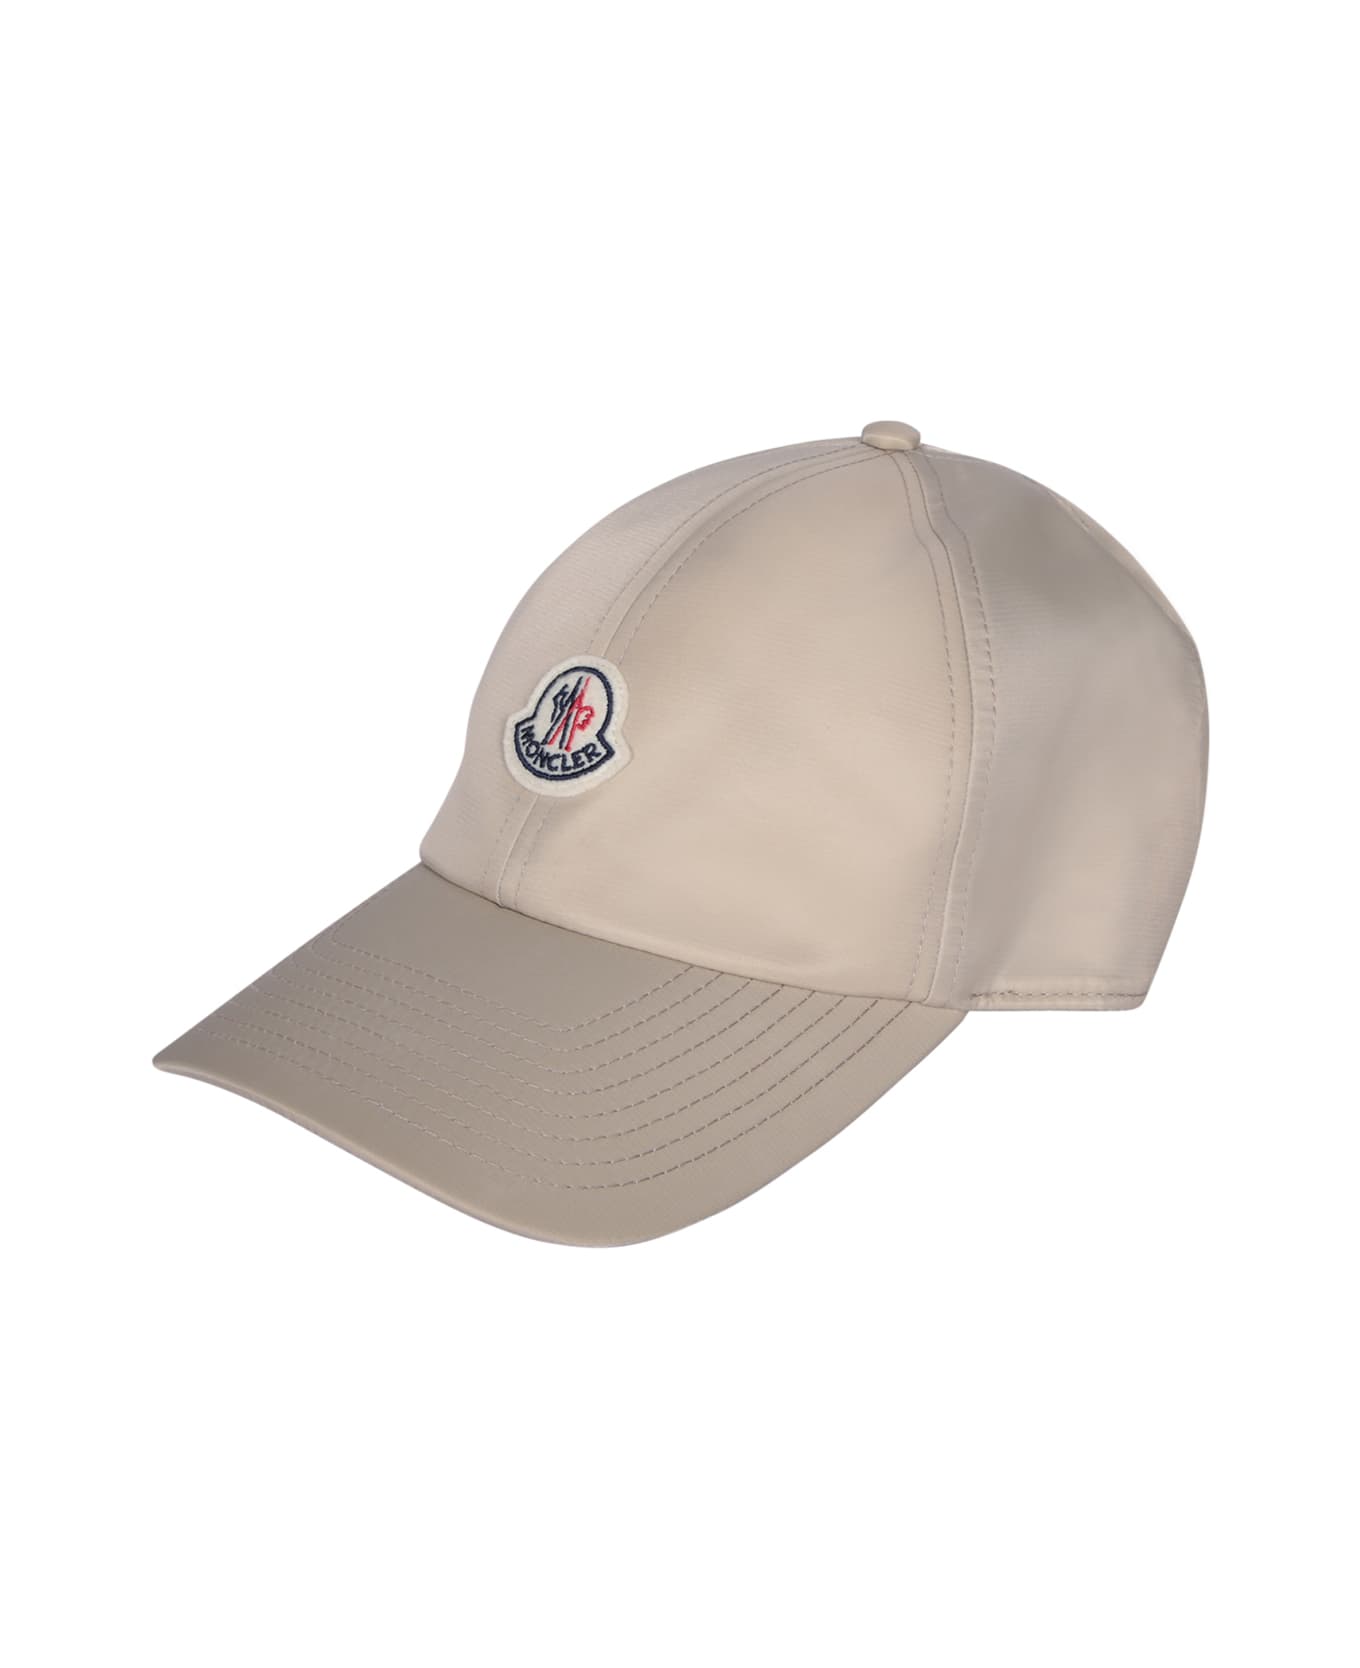 Moncler Logo Patch Baseball Cap - Beige